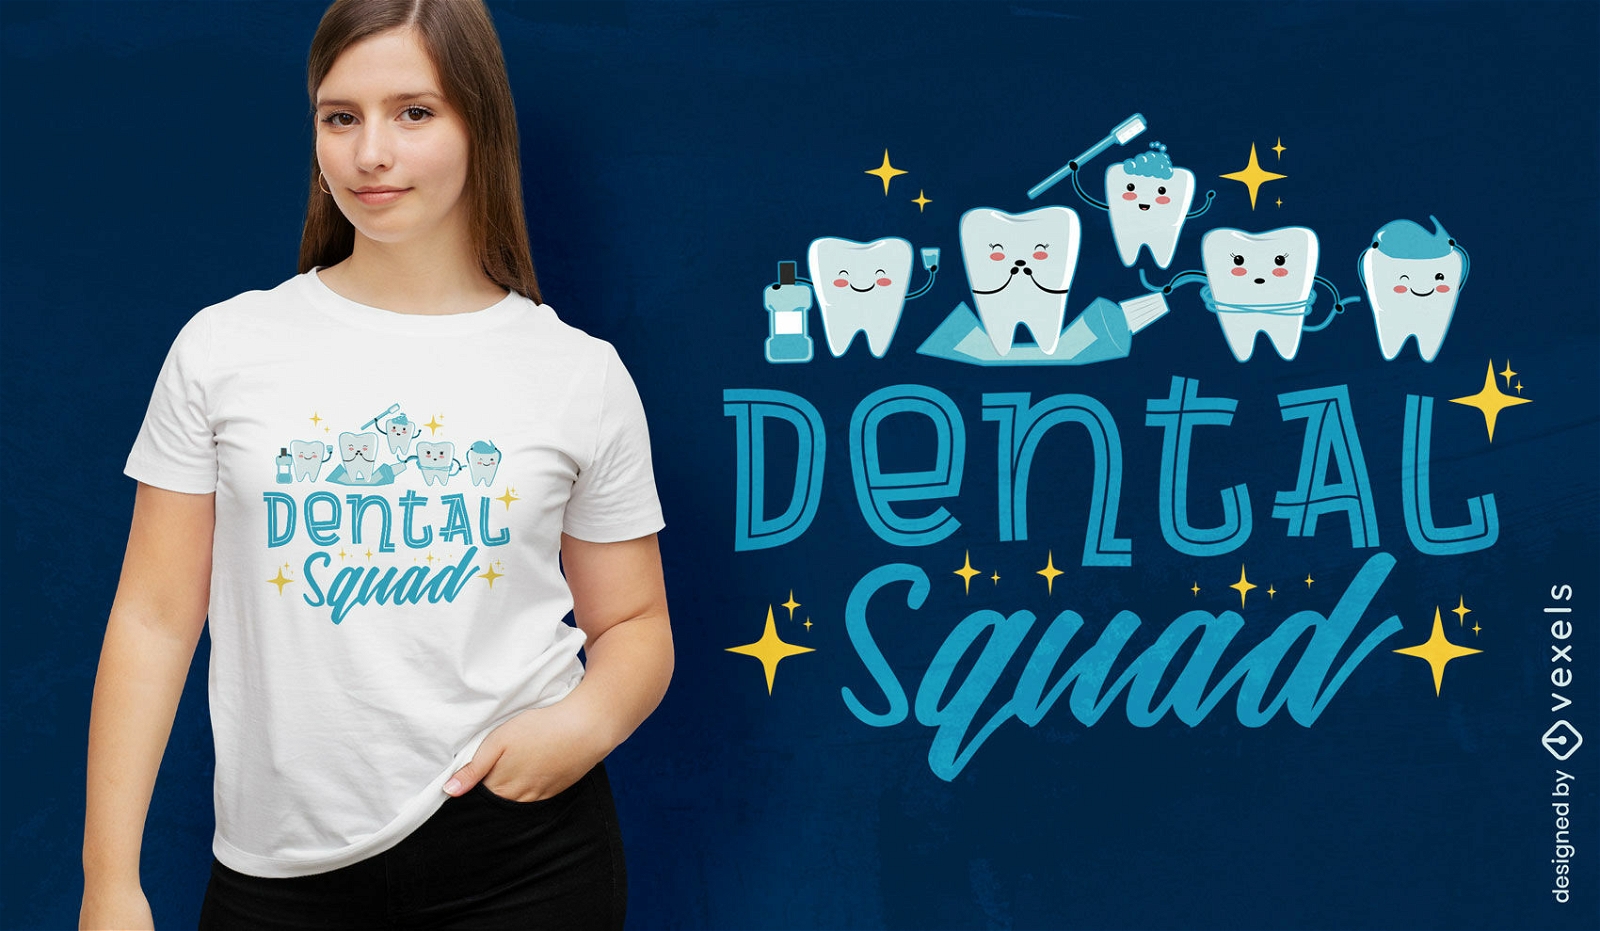 Teeth dental squad t-shirt design